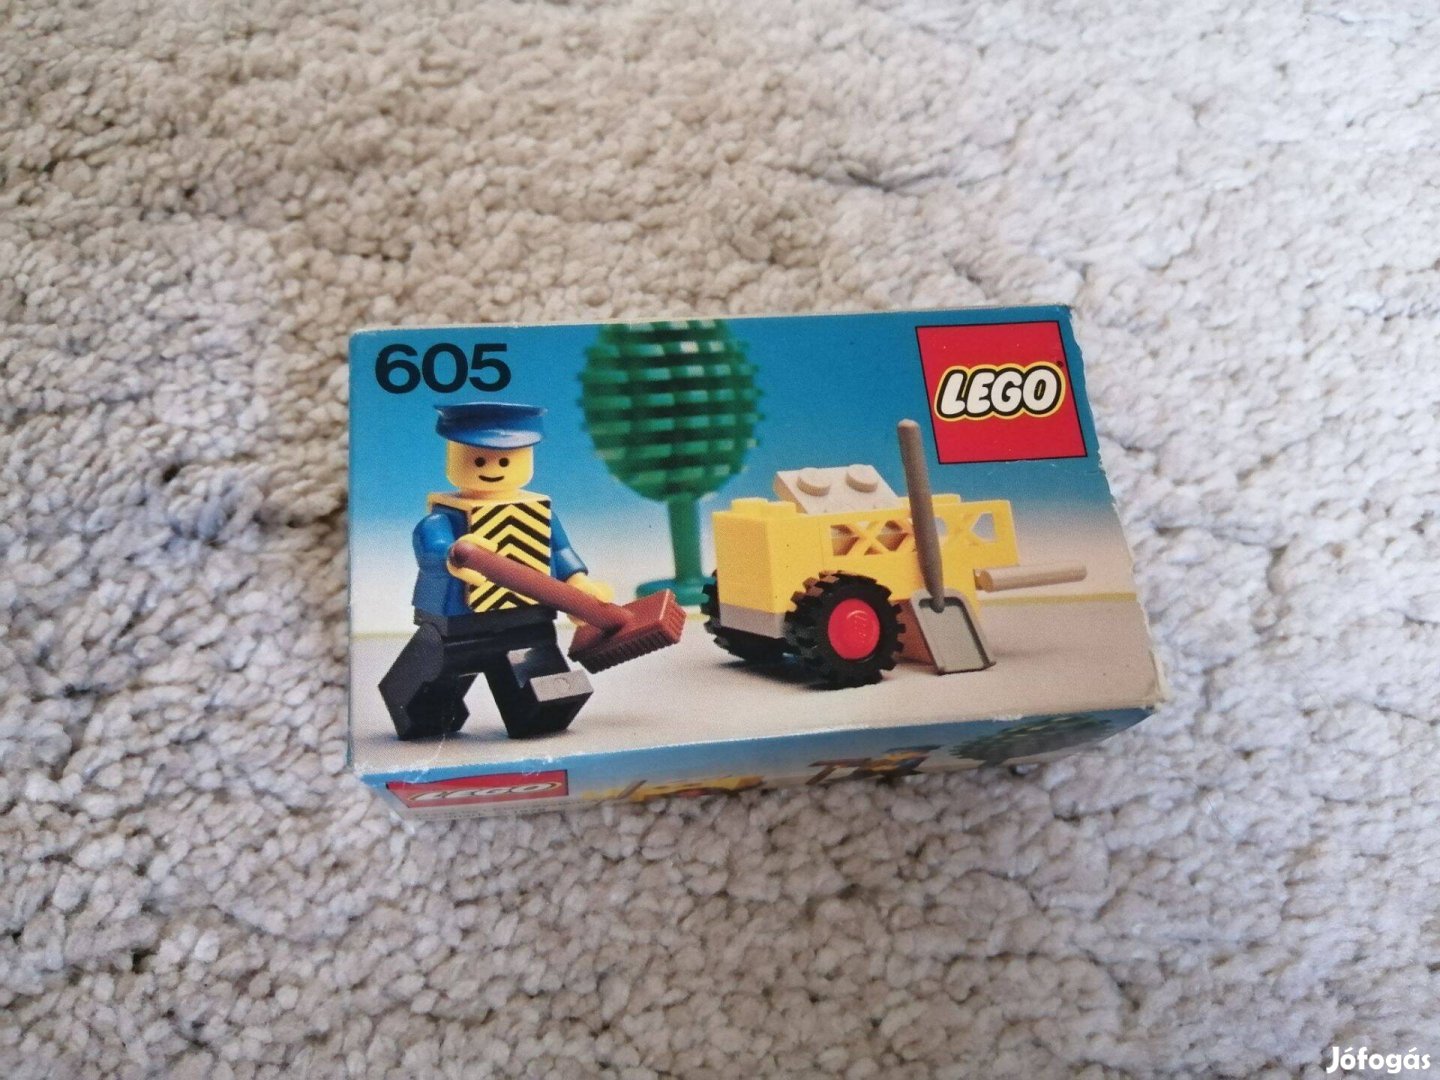 LEGO 605 utcaseprő classic town